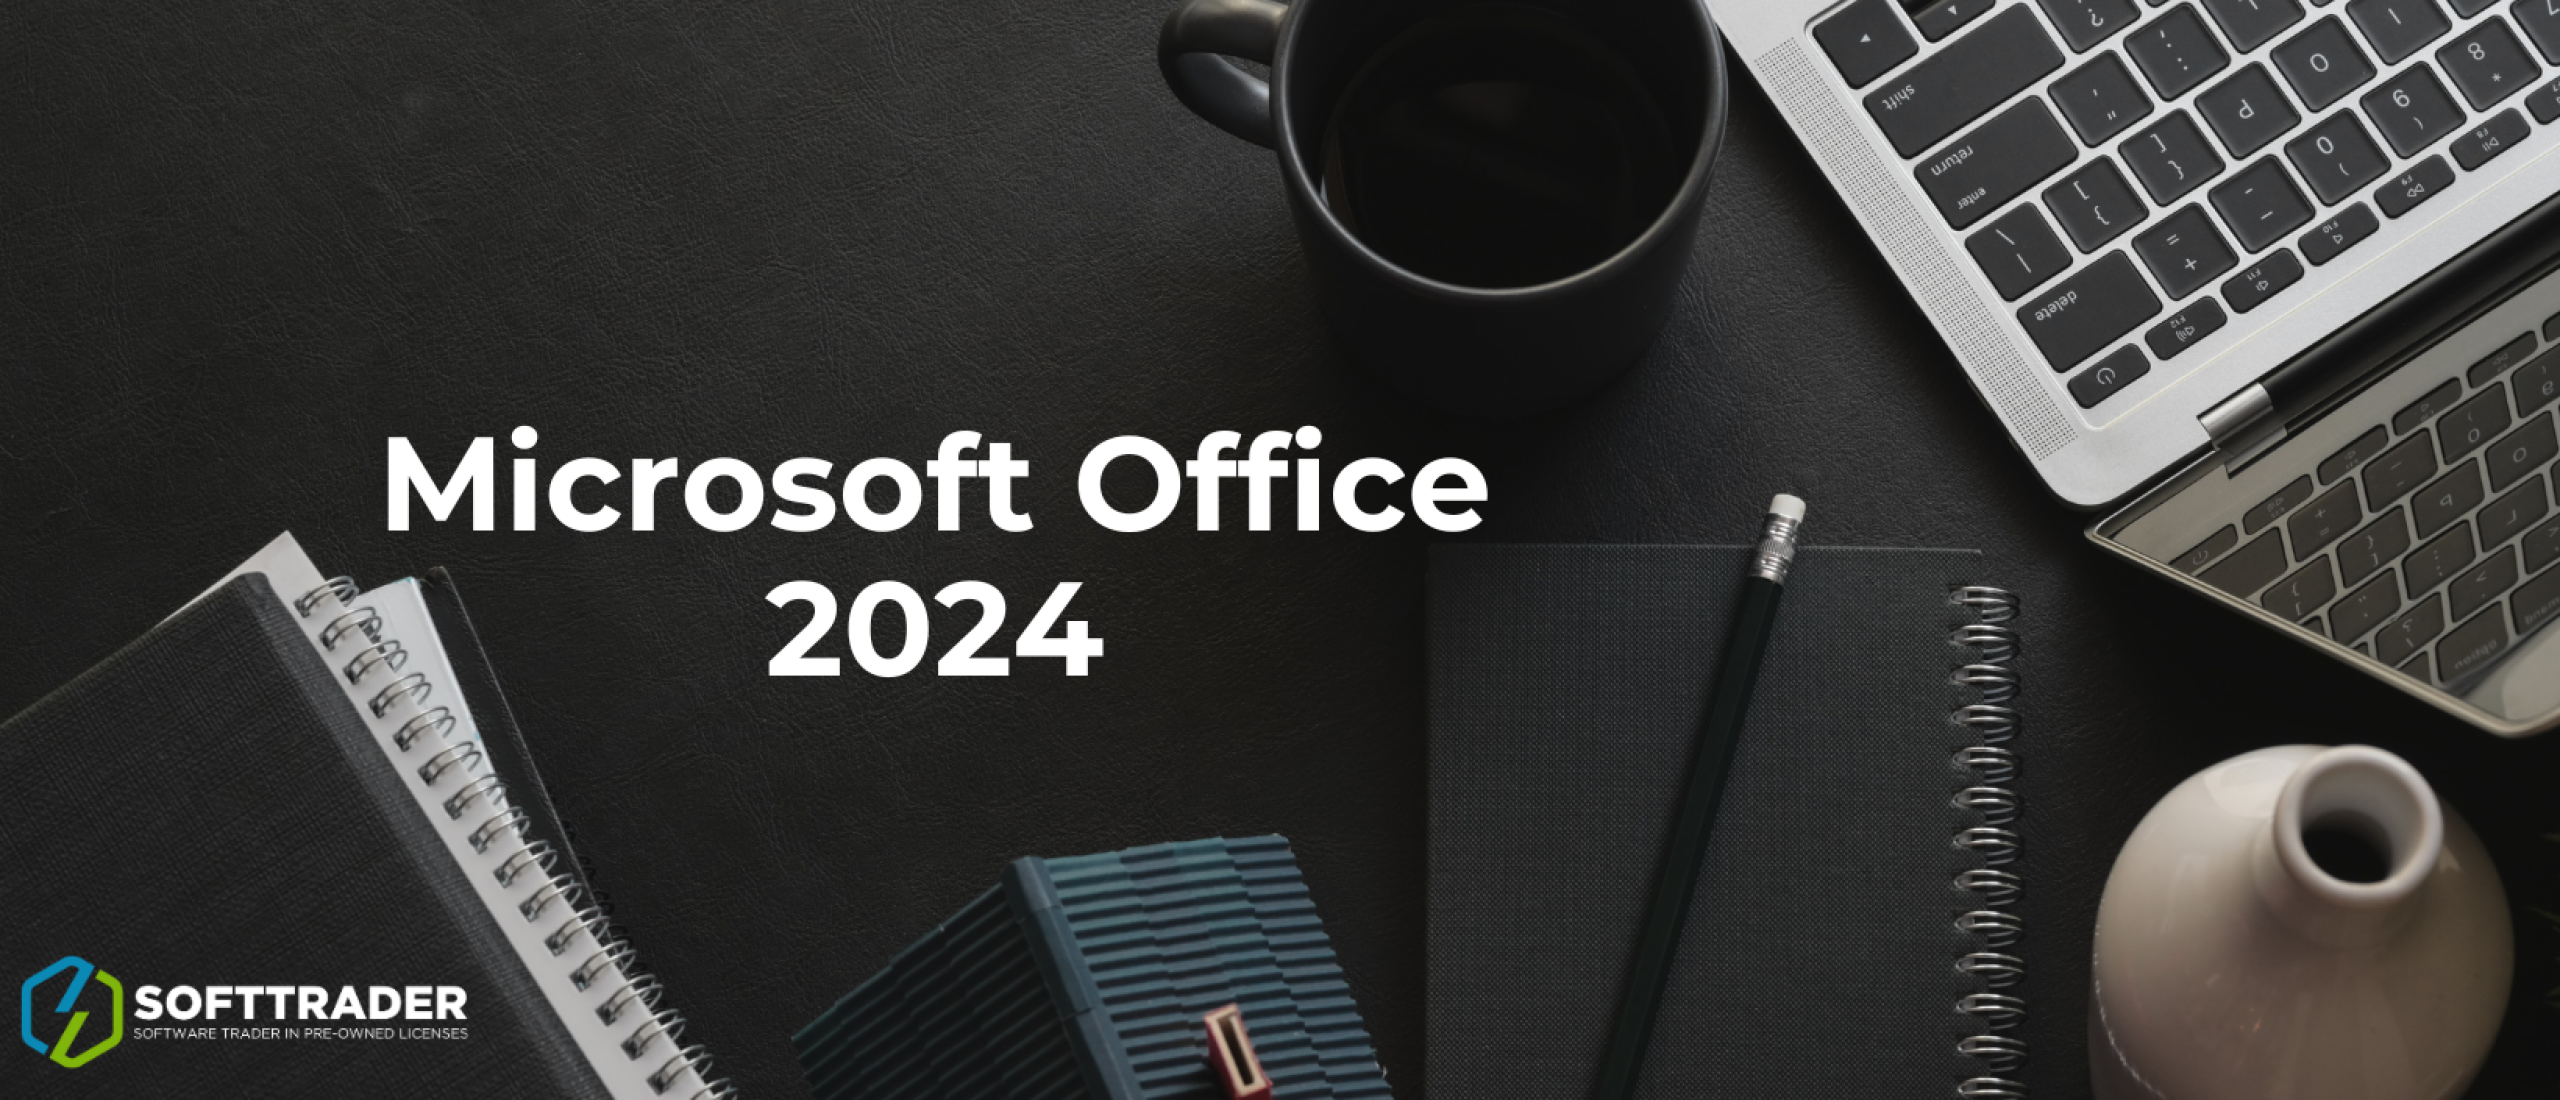 Microsoft Office 2024 Blog-Bild